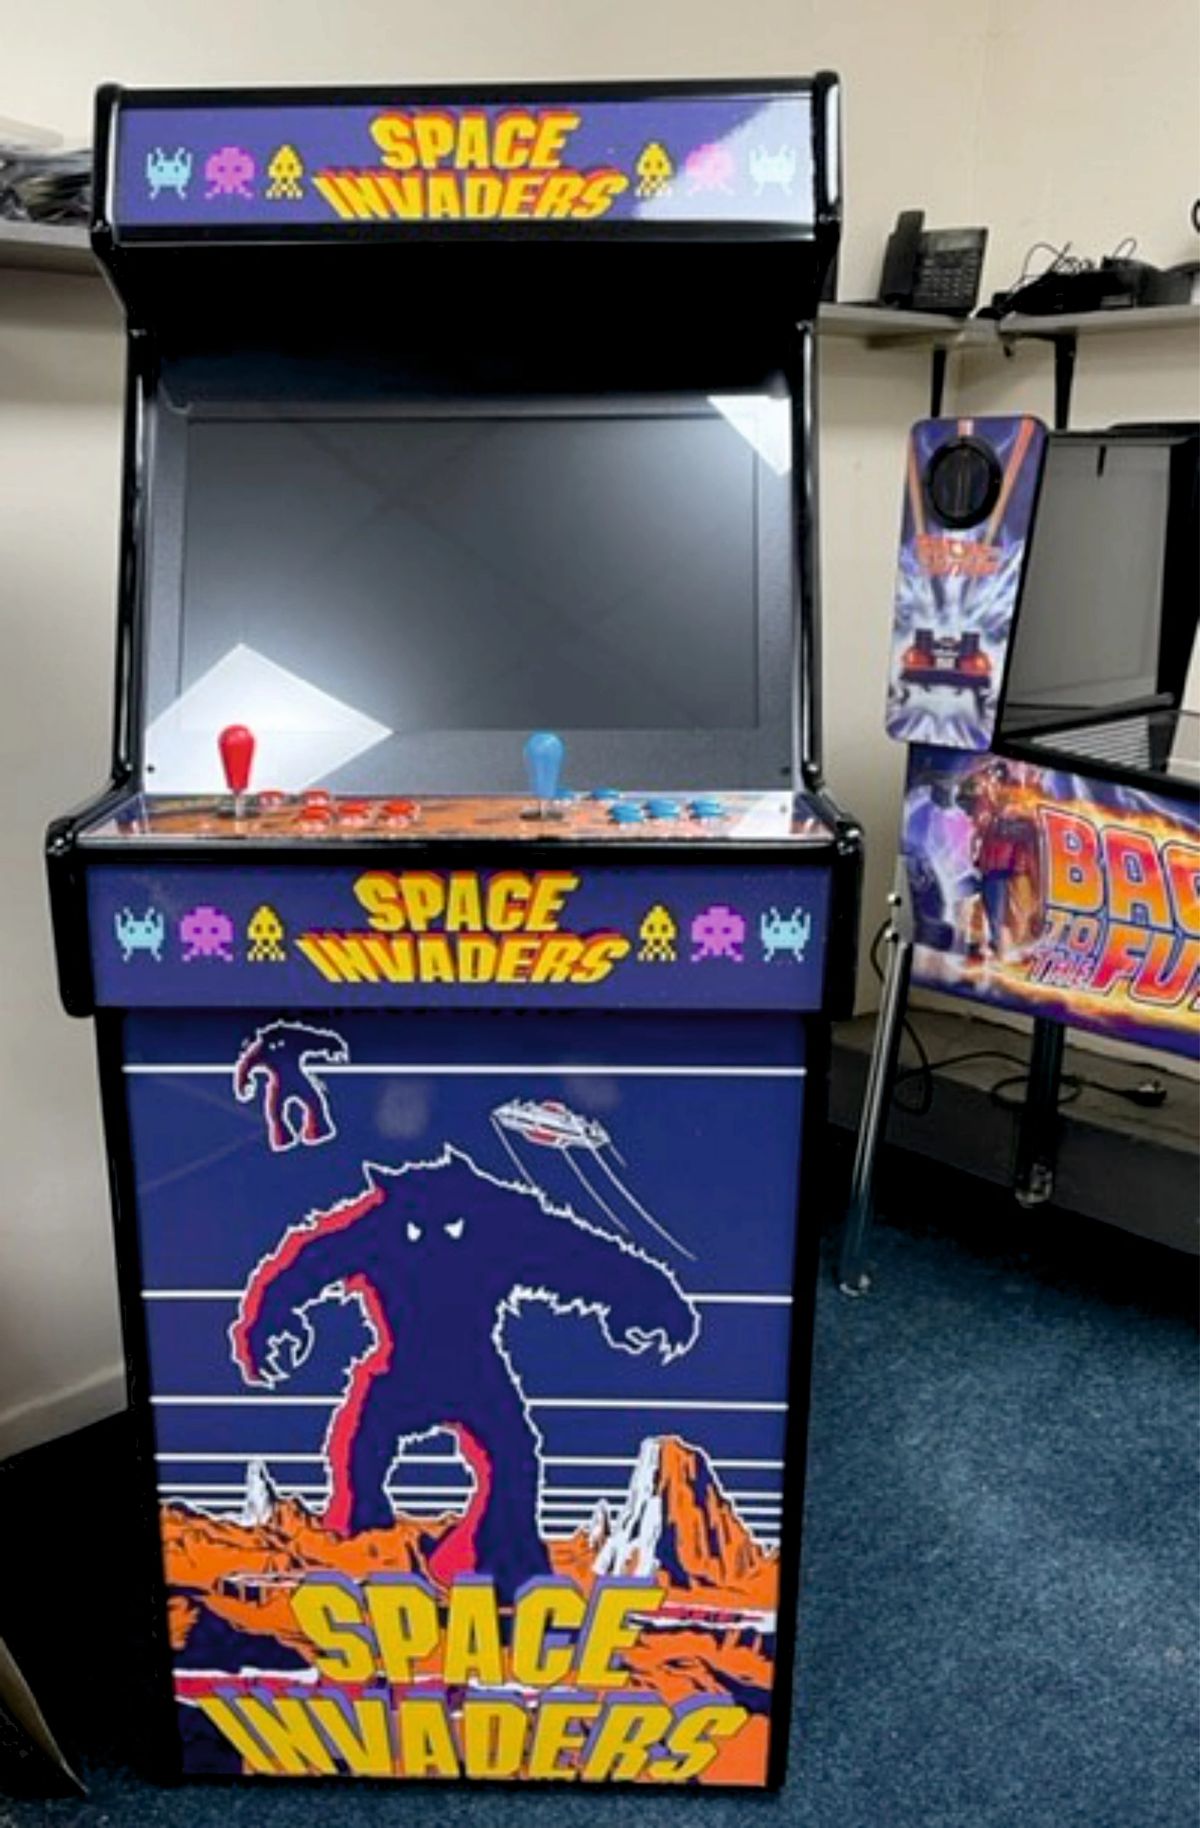 1970s arcade games